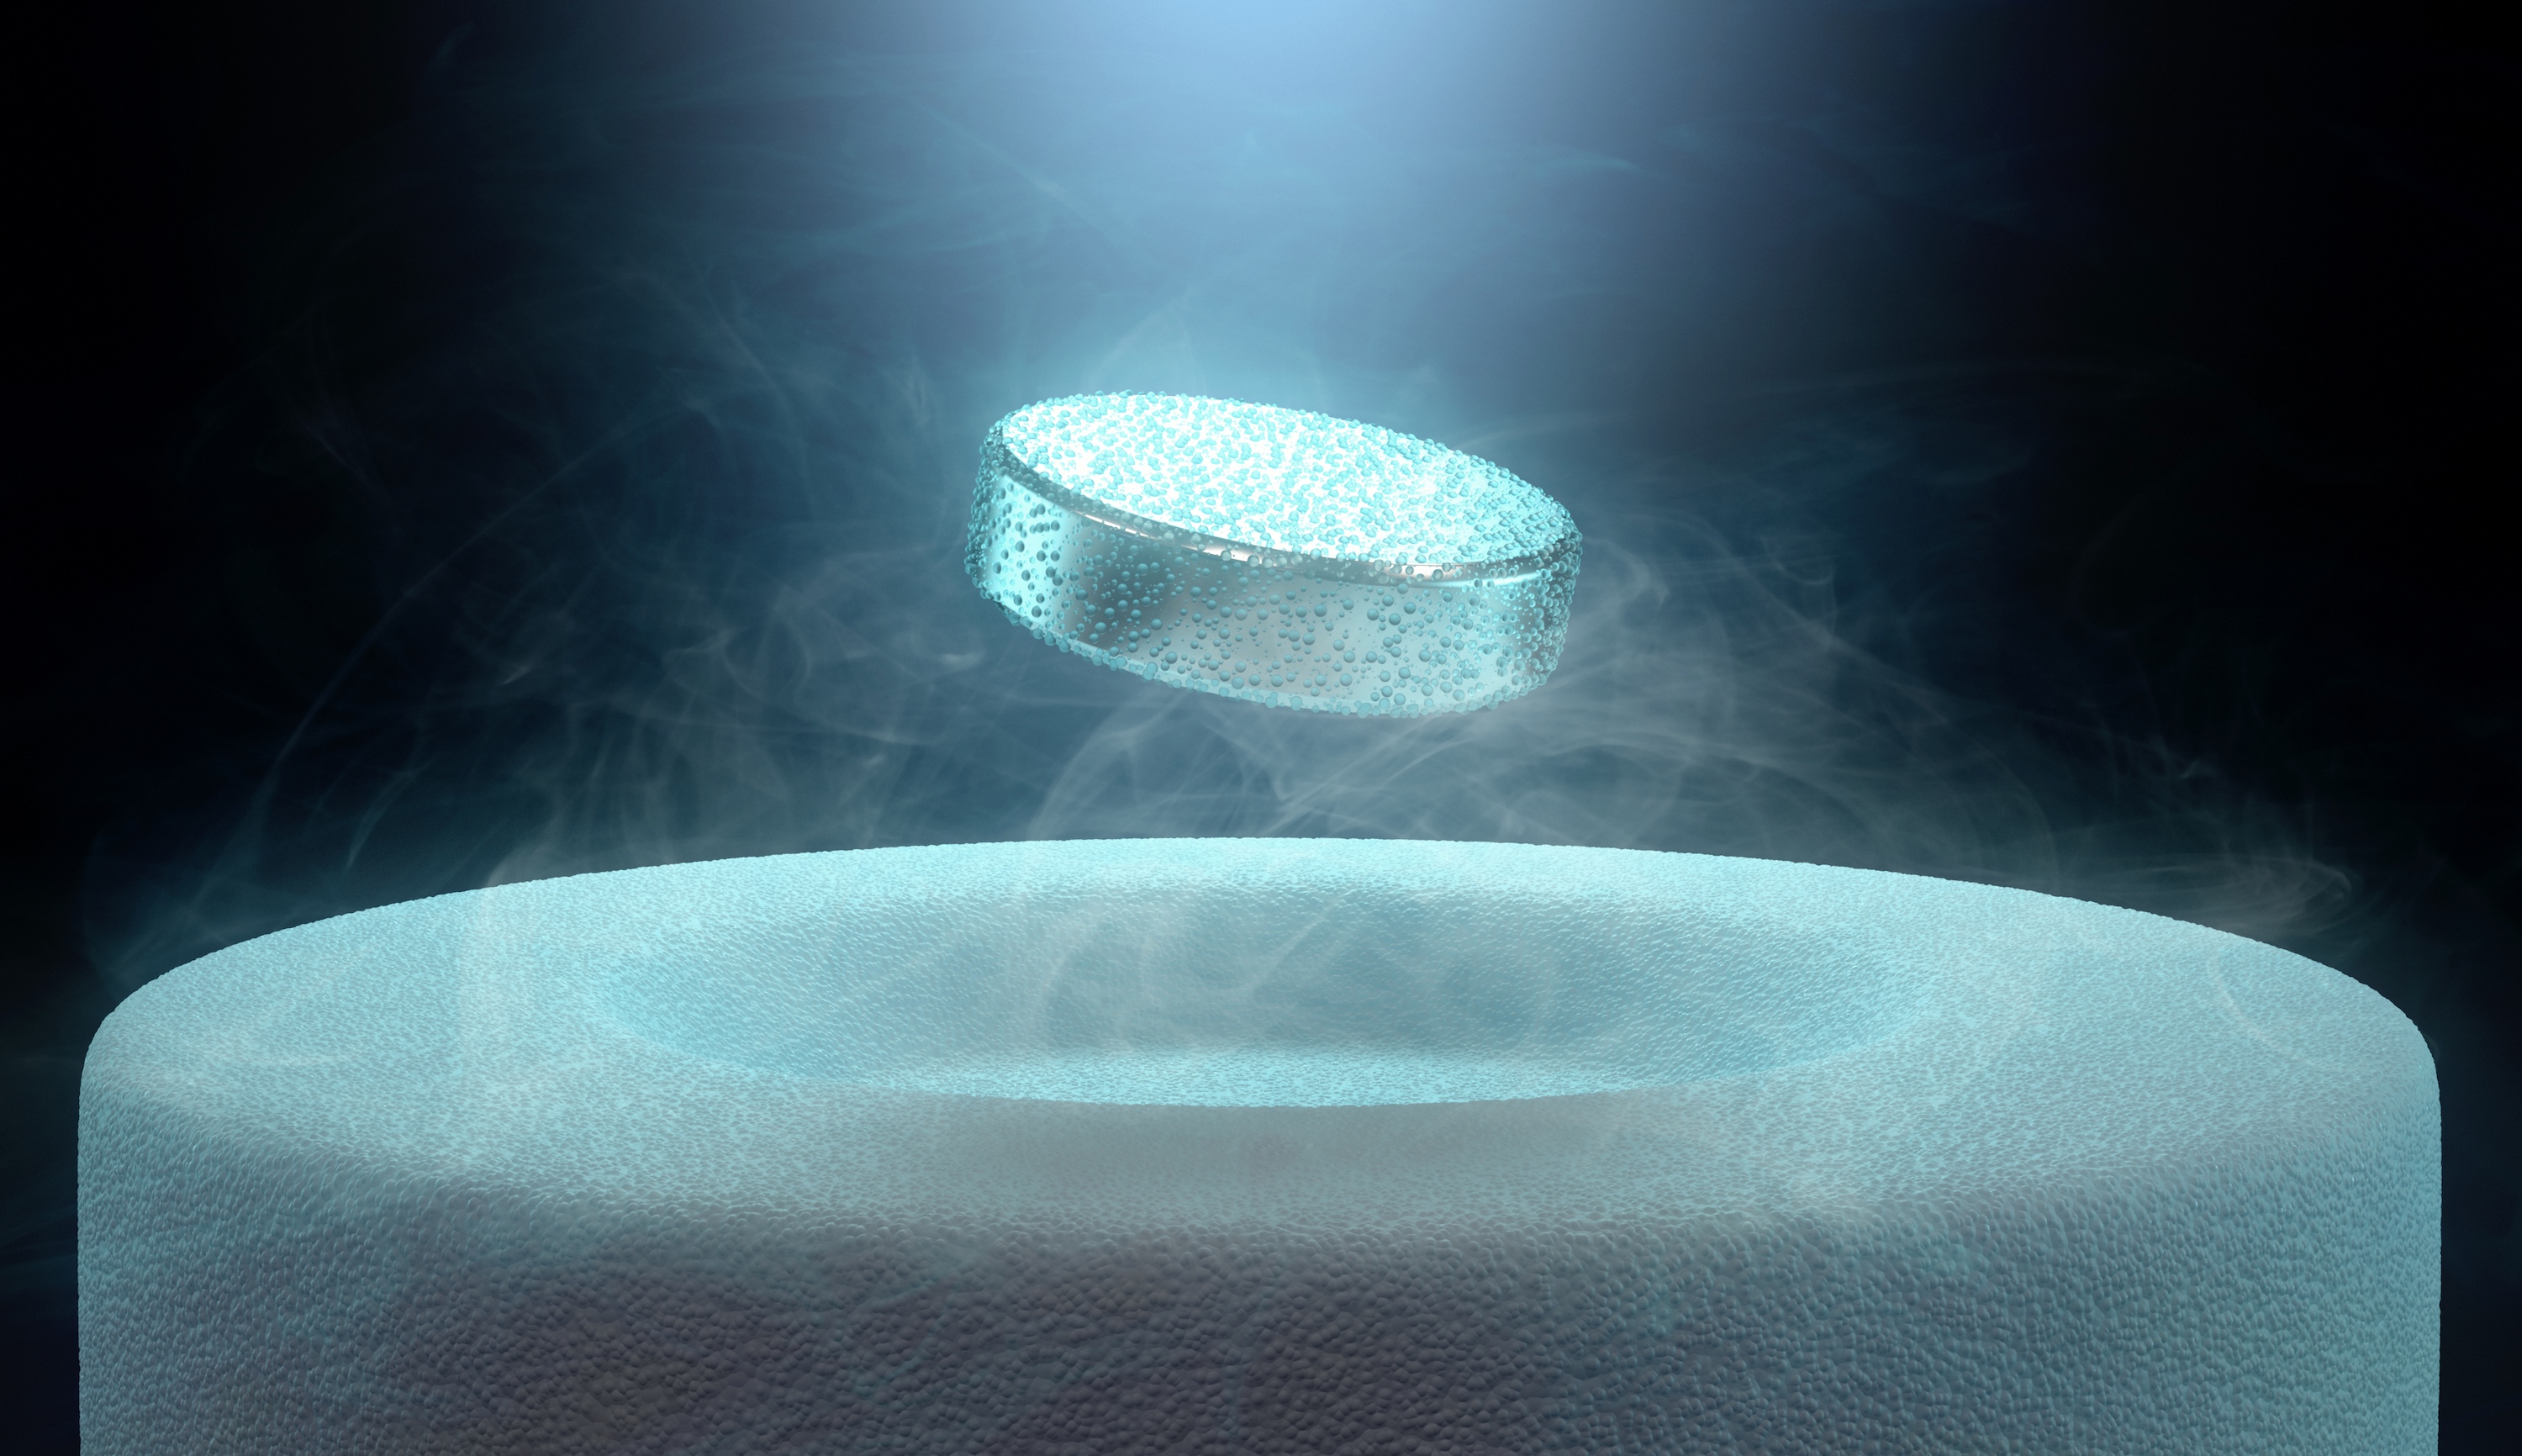 Illustration de la superconductivitié. © ktsdesign, Adobe Stock